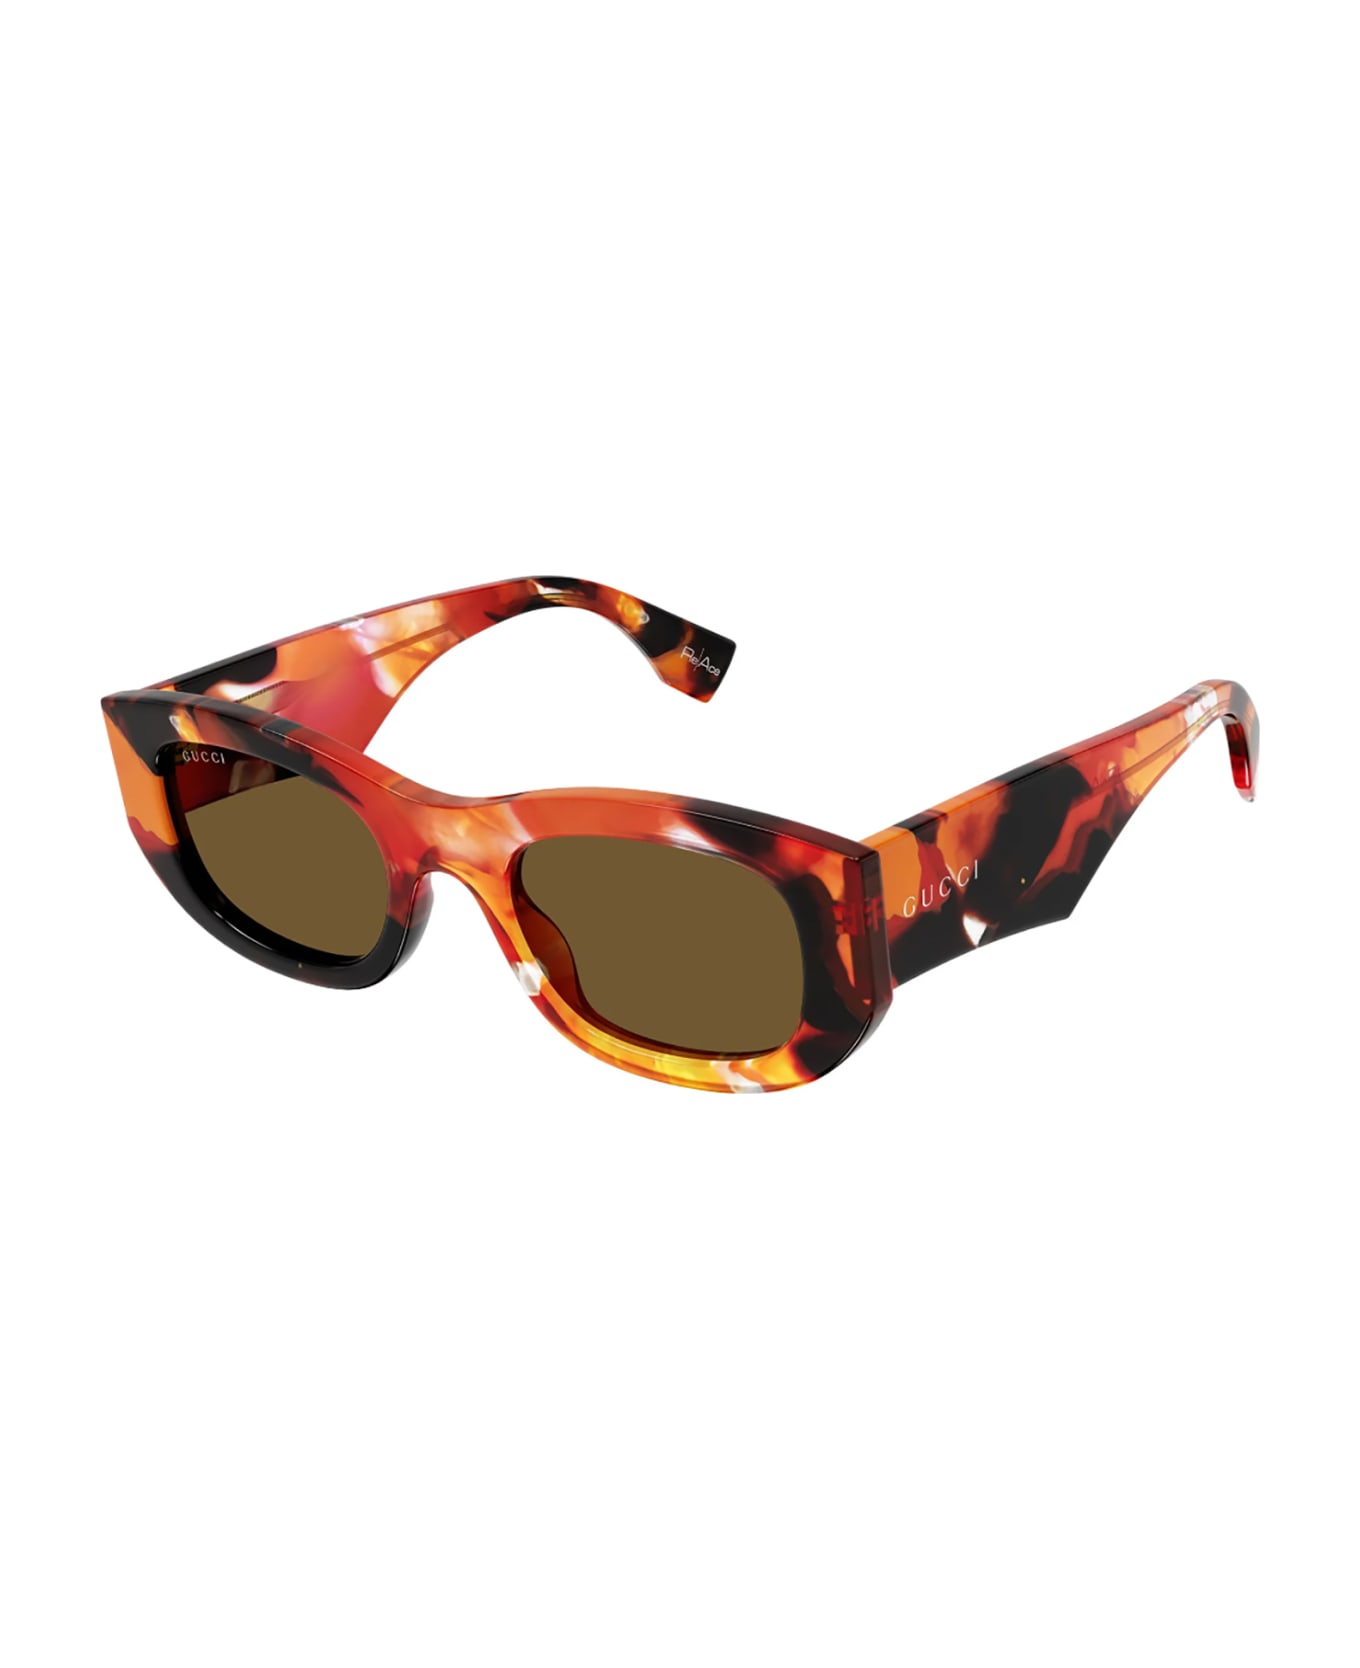 Gucci Eyewear GG1627S Sunglasses - Orange Orange Brown